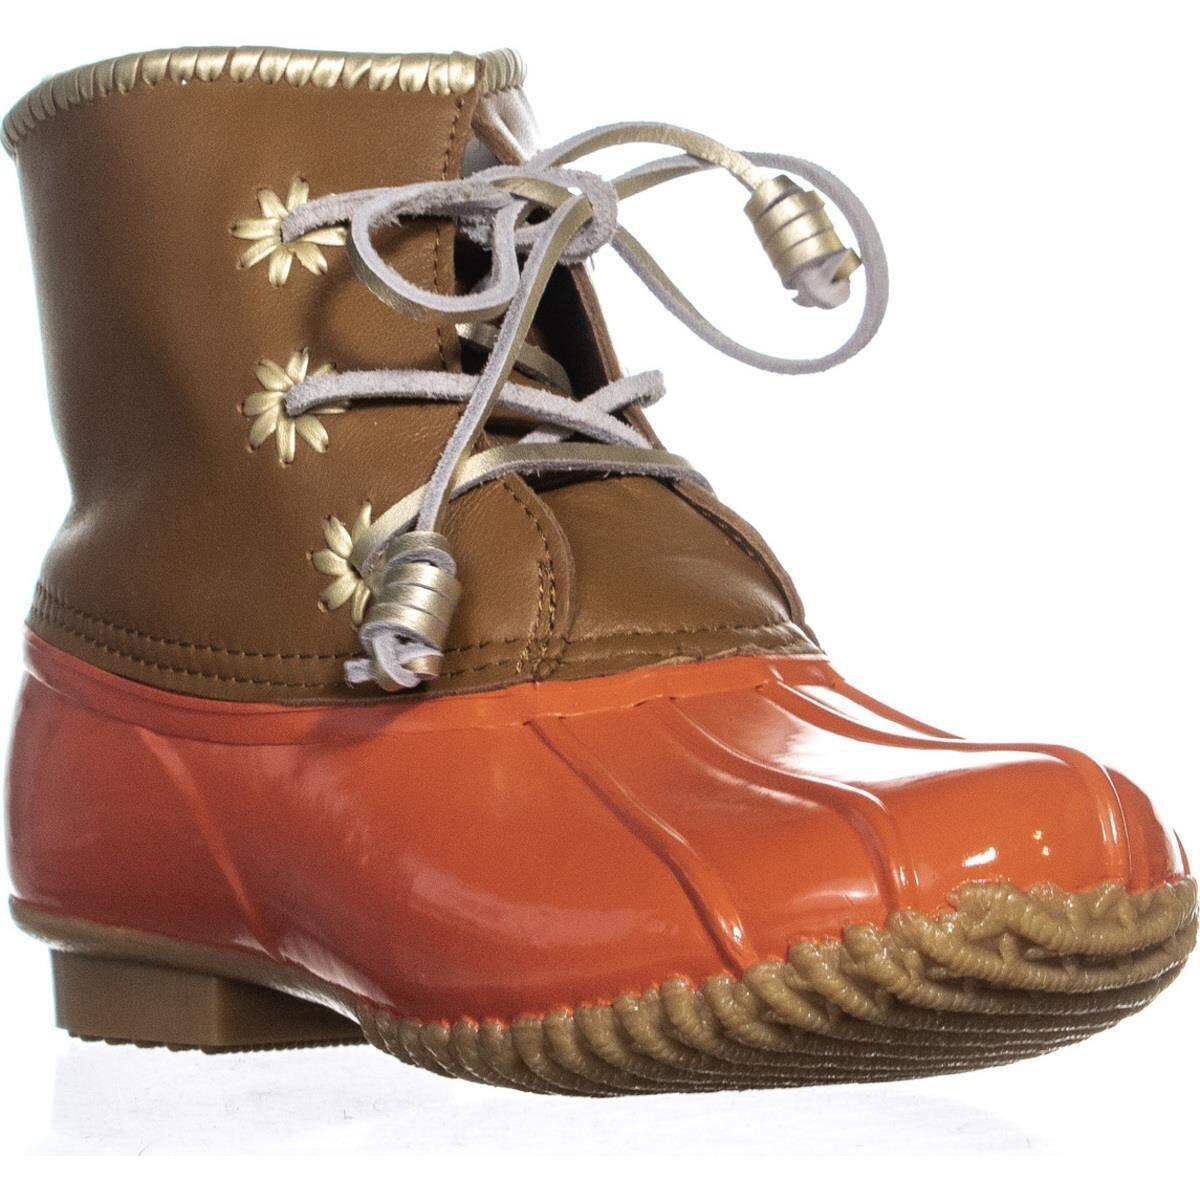 coral rain boots